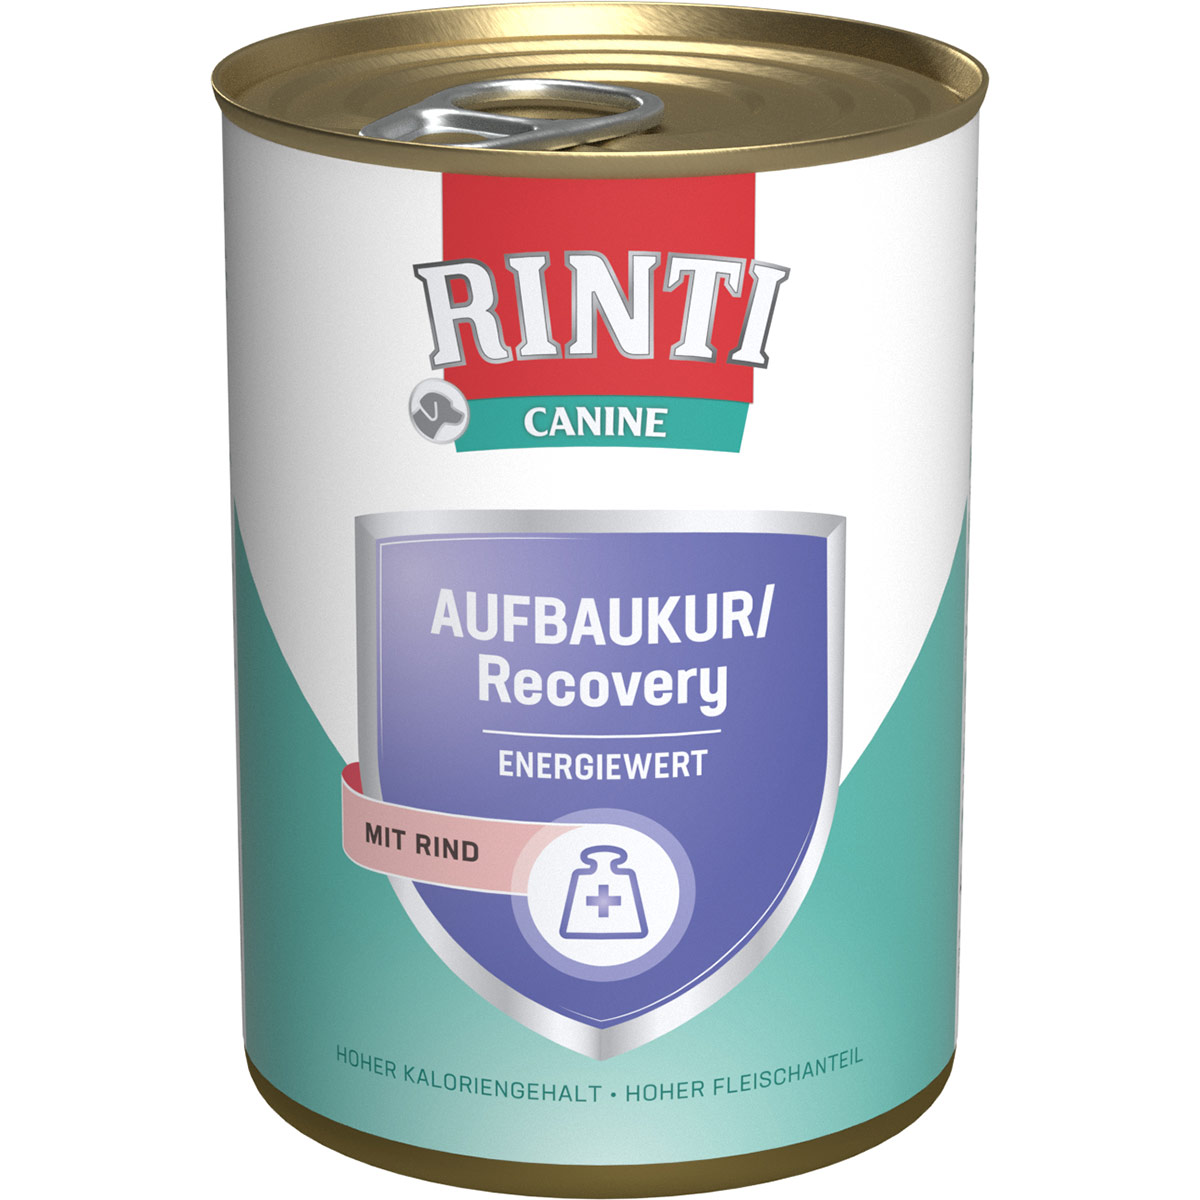 RINTI Canine Aufbaukur/Recovery hovězí maso 6 × 400 g